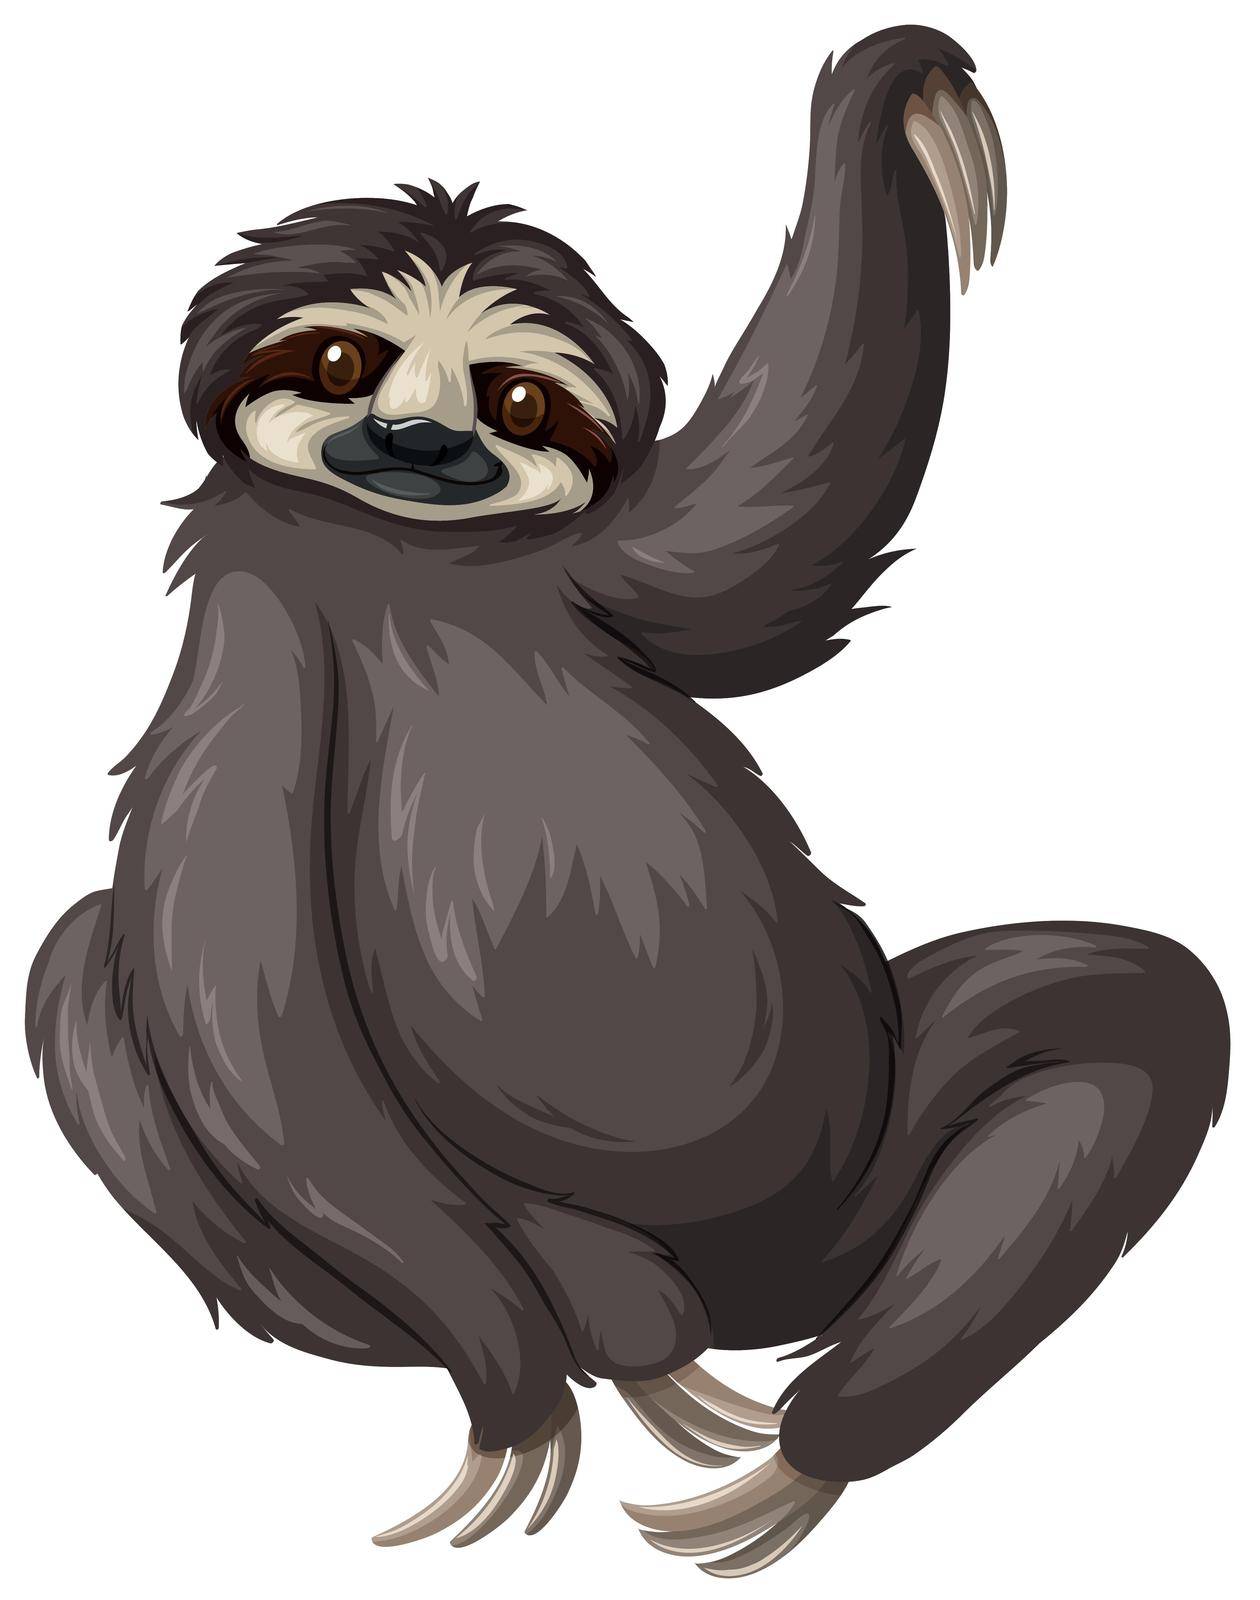 Sloth with black fur illustration